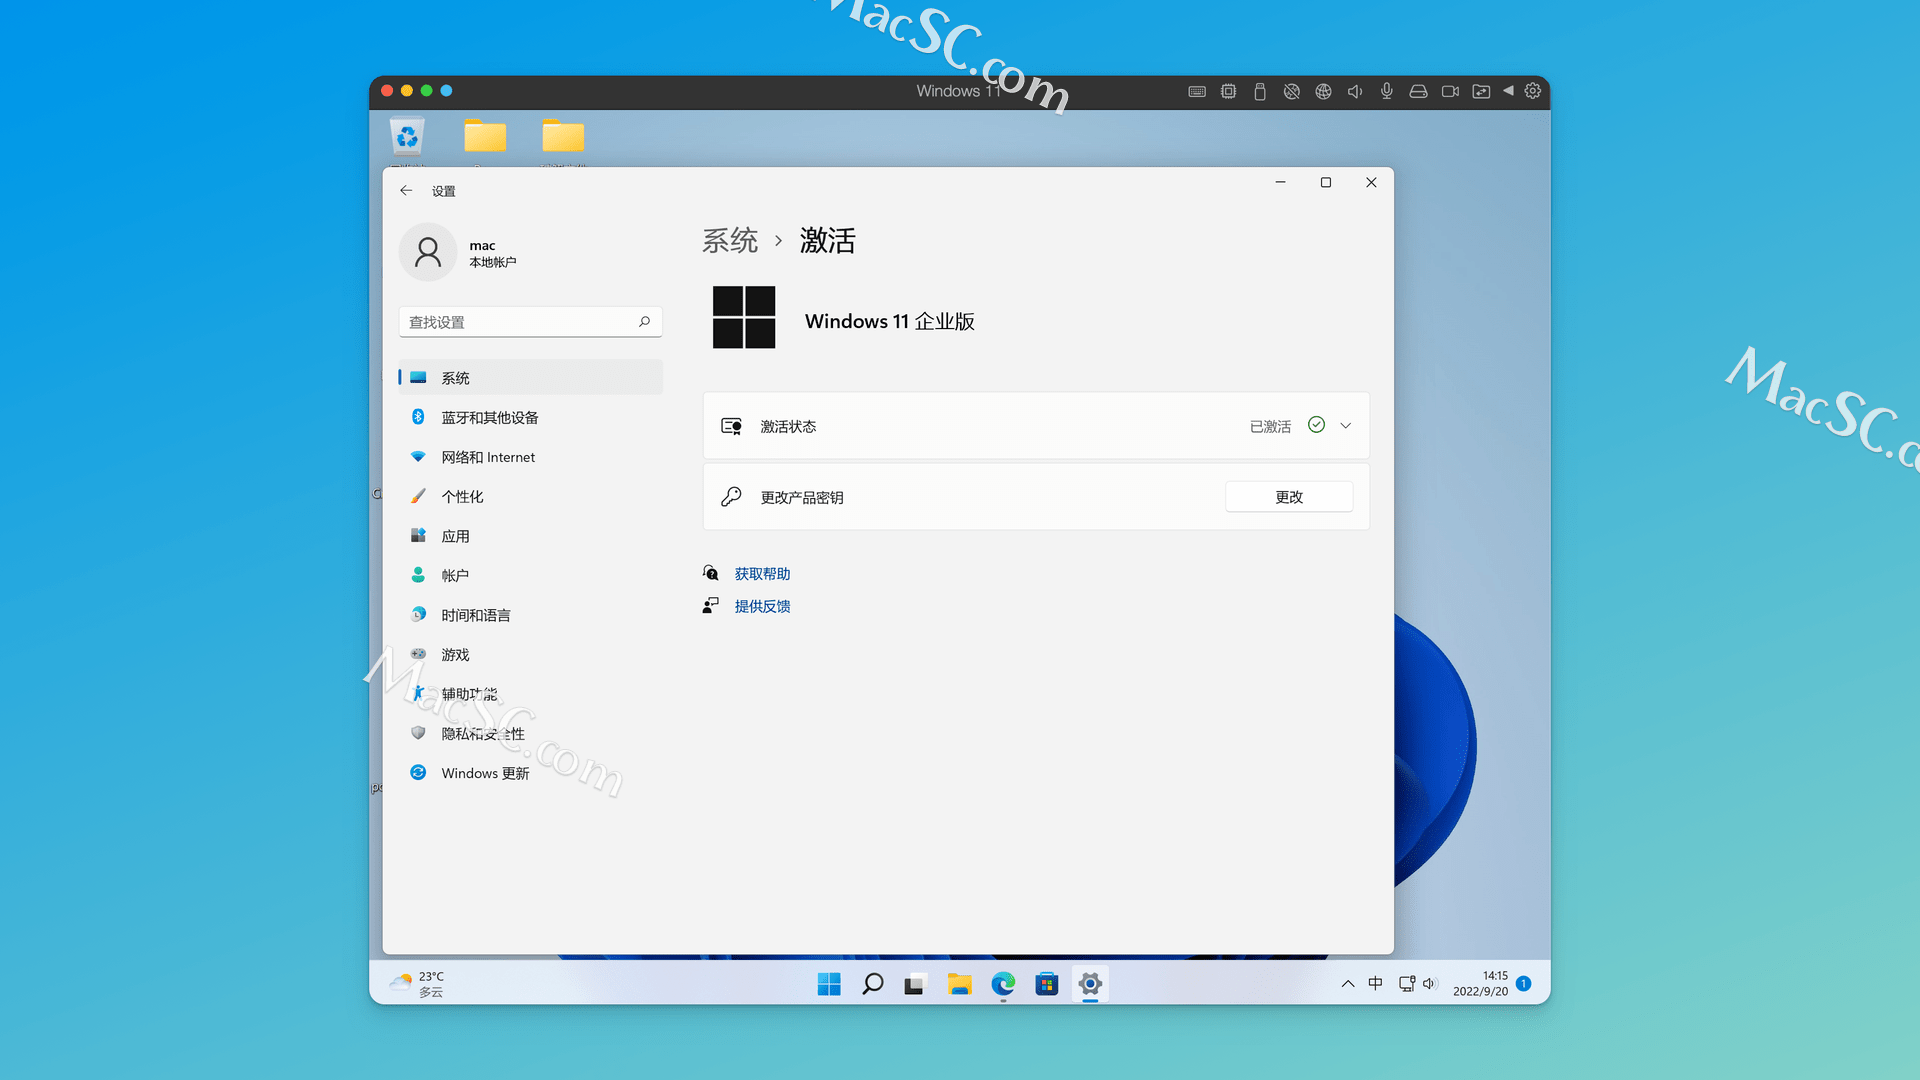 mac最佳虚拟机软件Parallels Desktop 18完美激活版